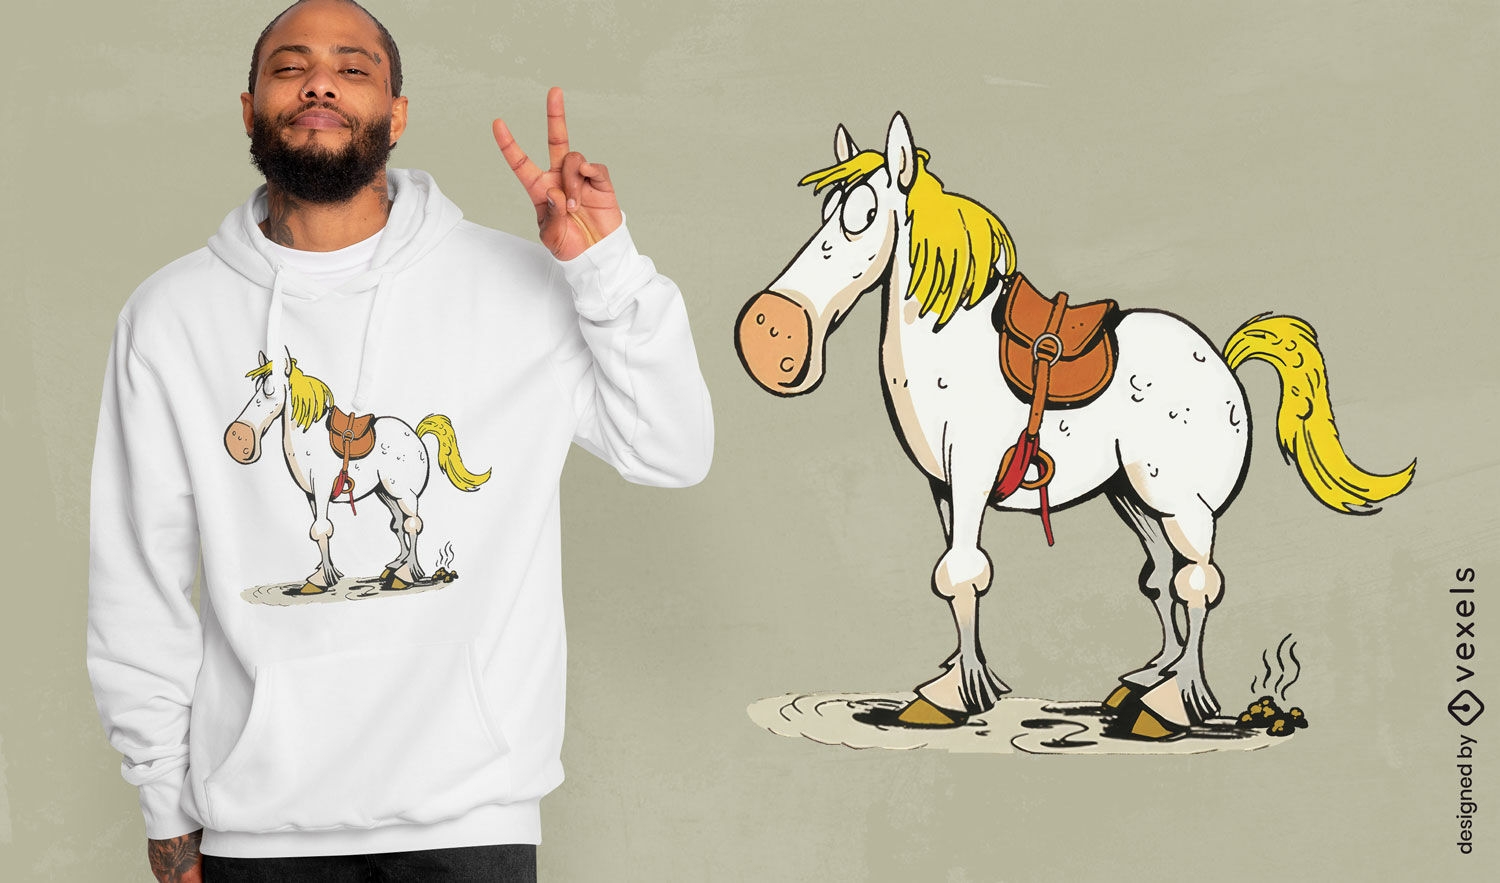 Funny cartoon horse t-shirt design